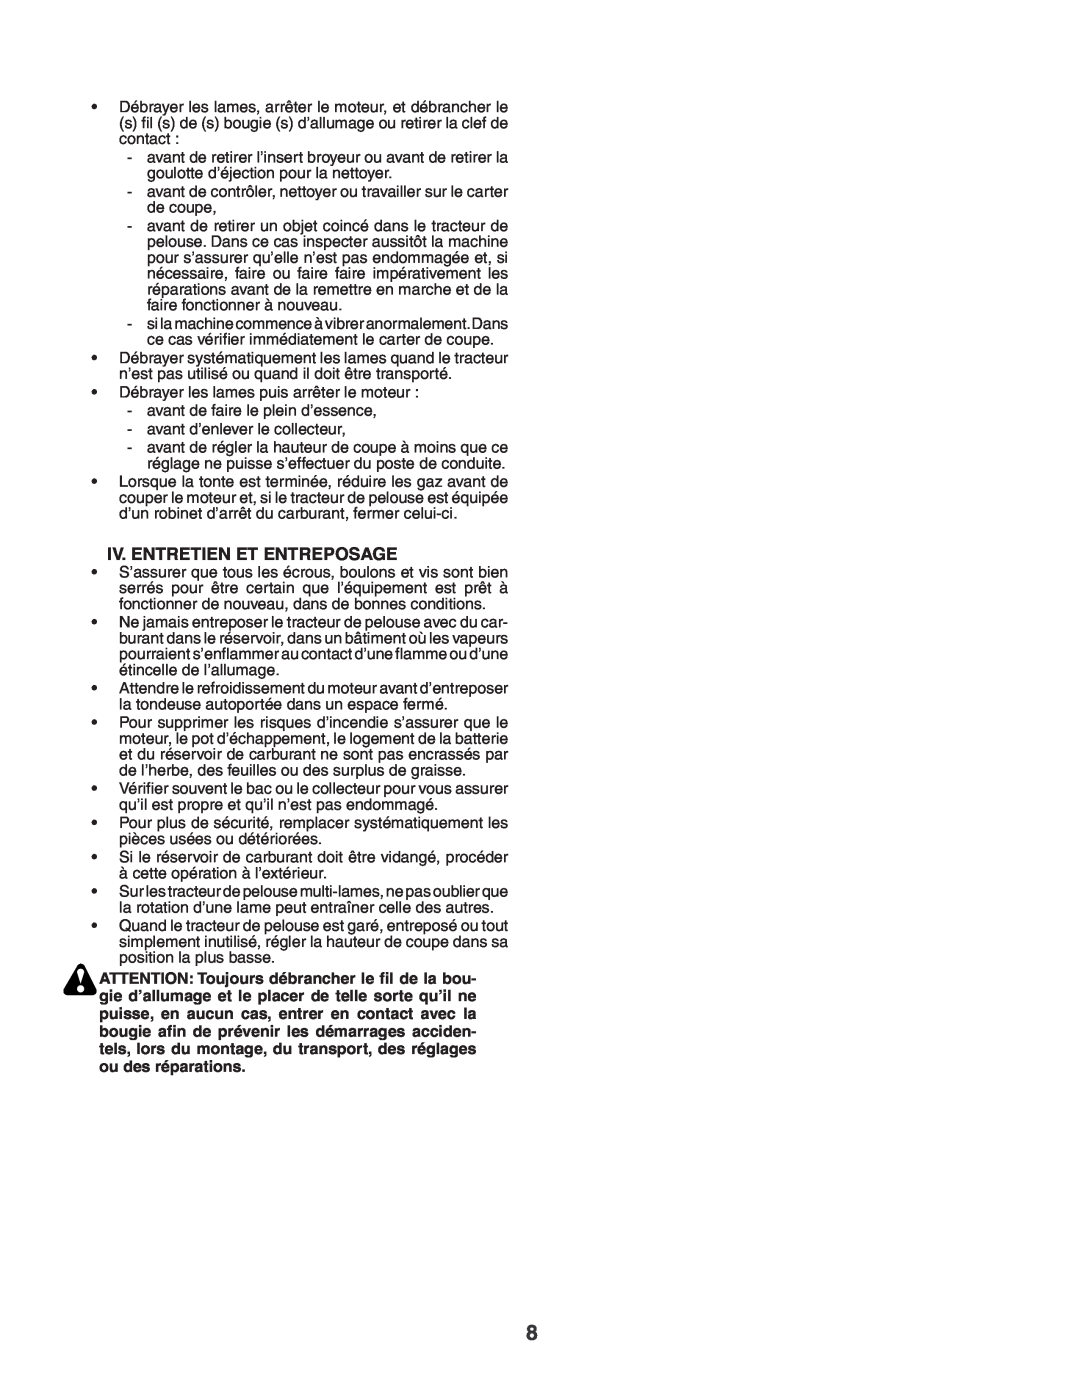 Husqvarna GTH260XP instruction manual Iv. Entretien Et Entreposage 